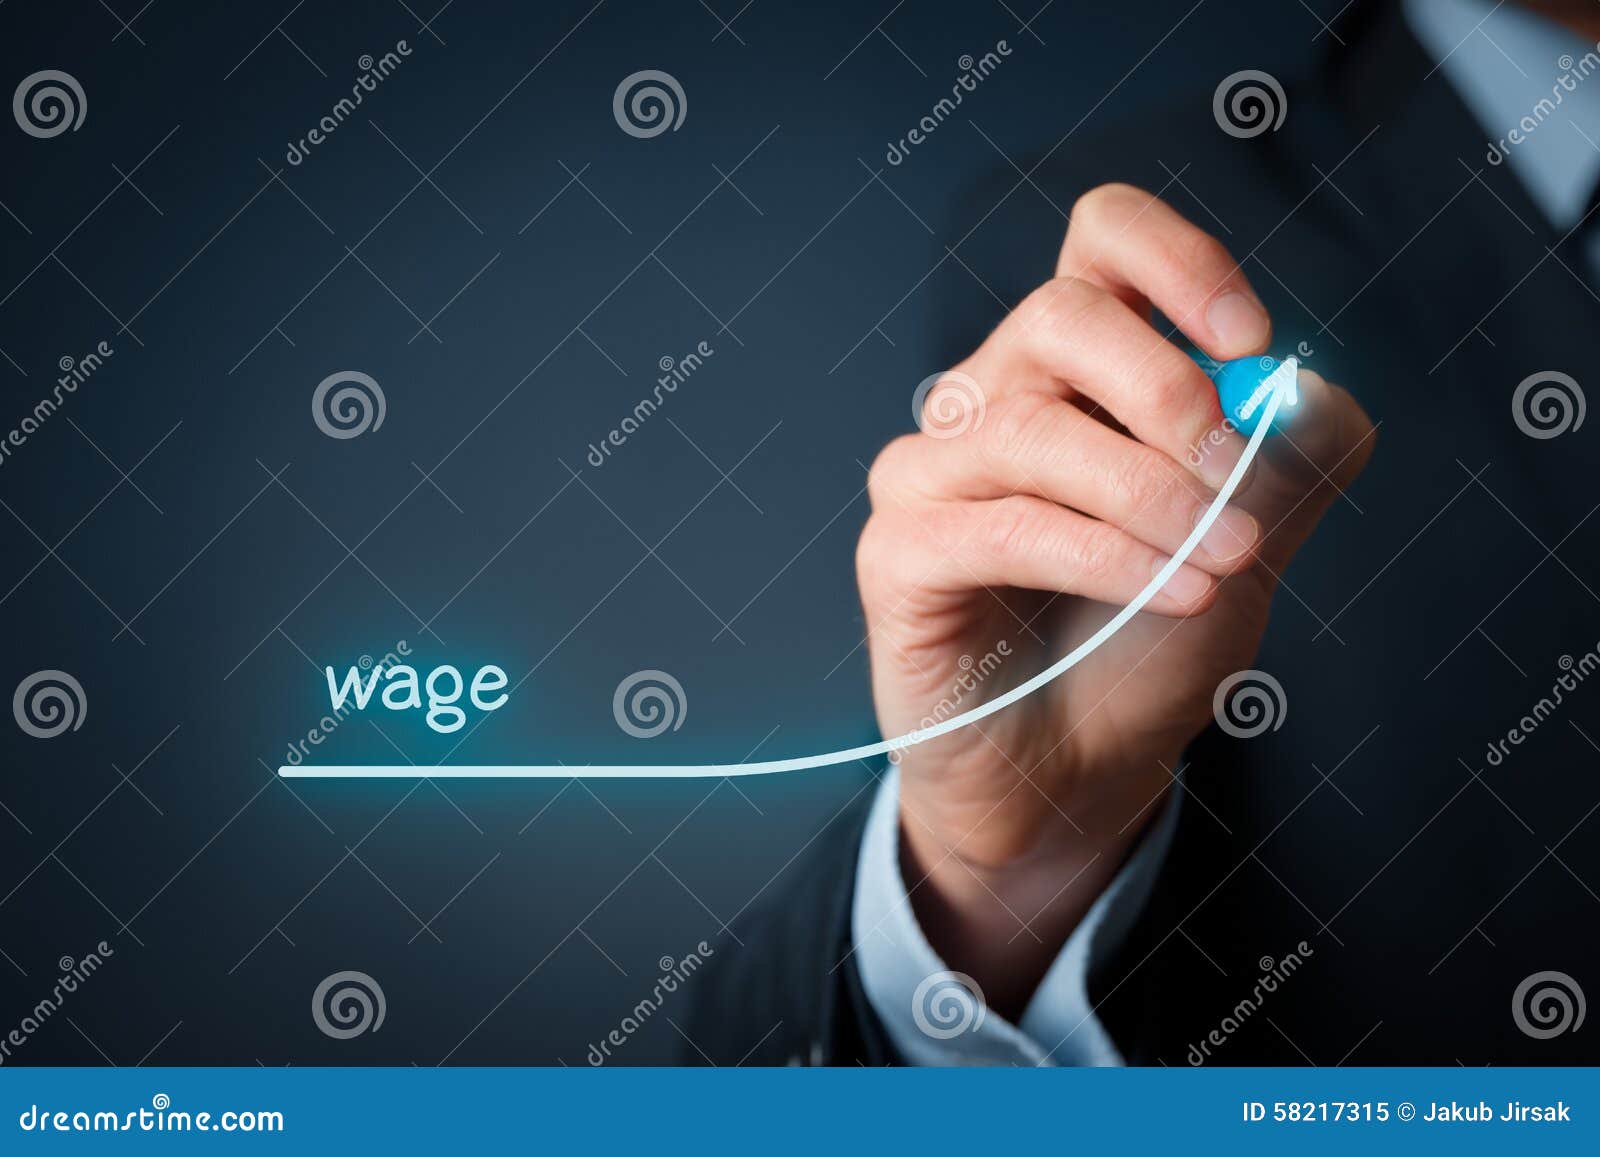 wage increase